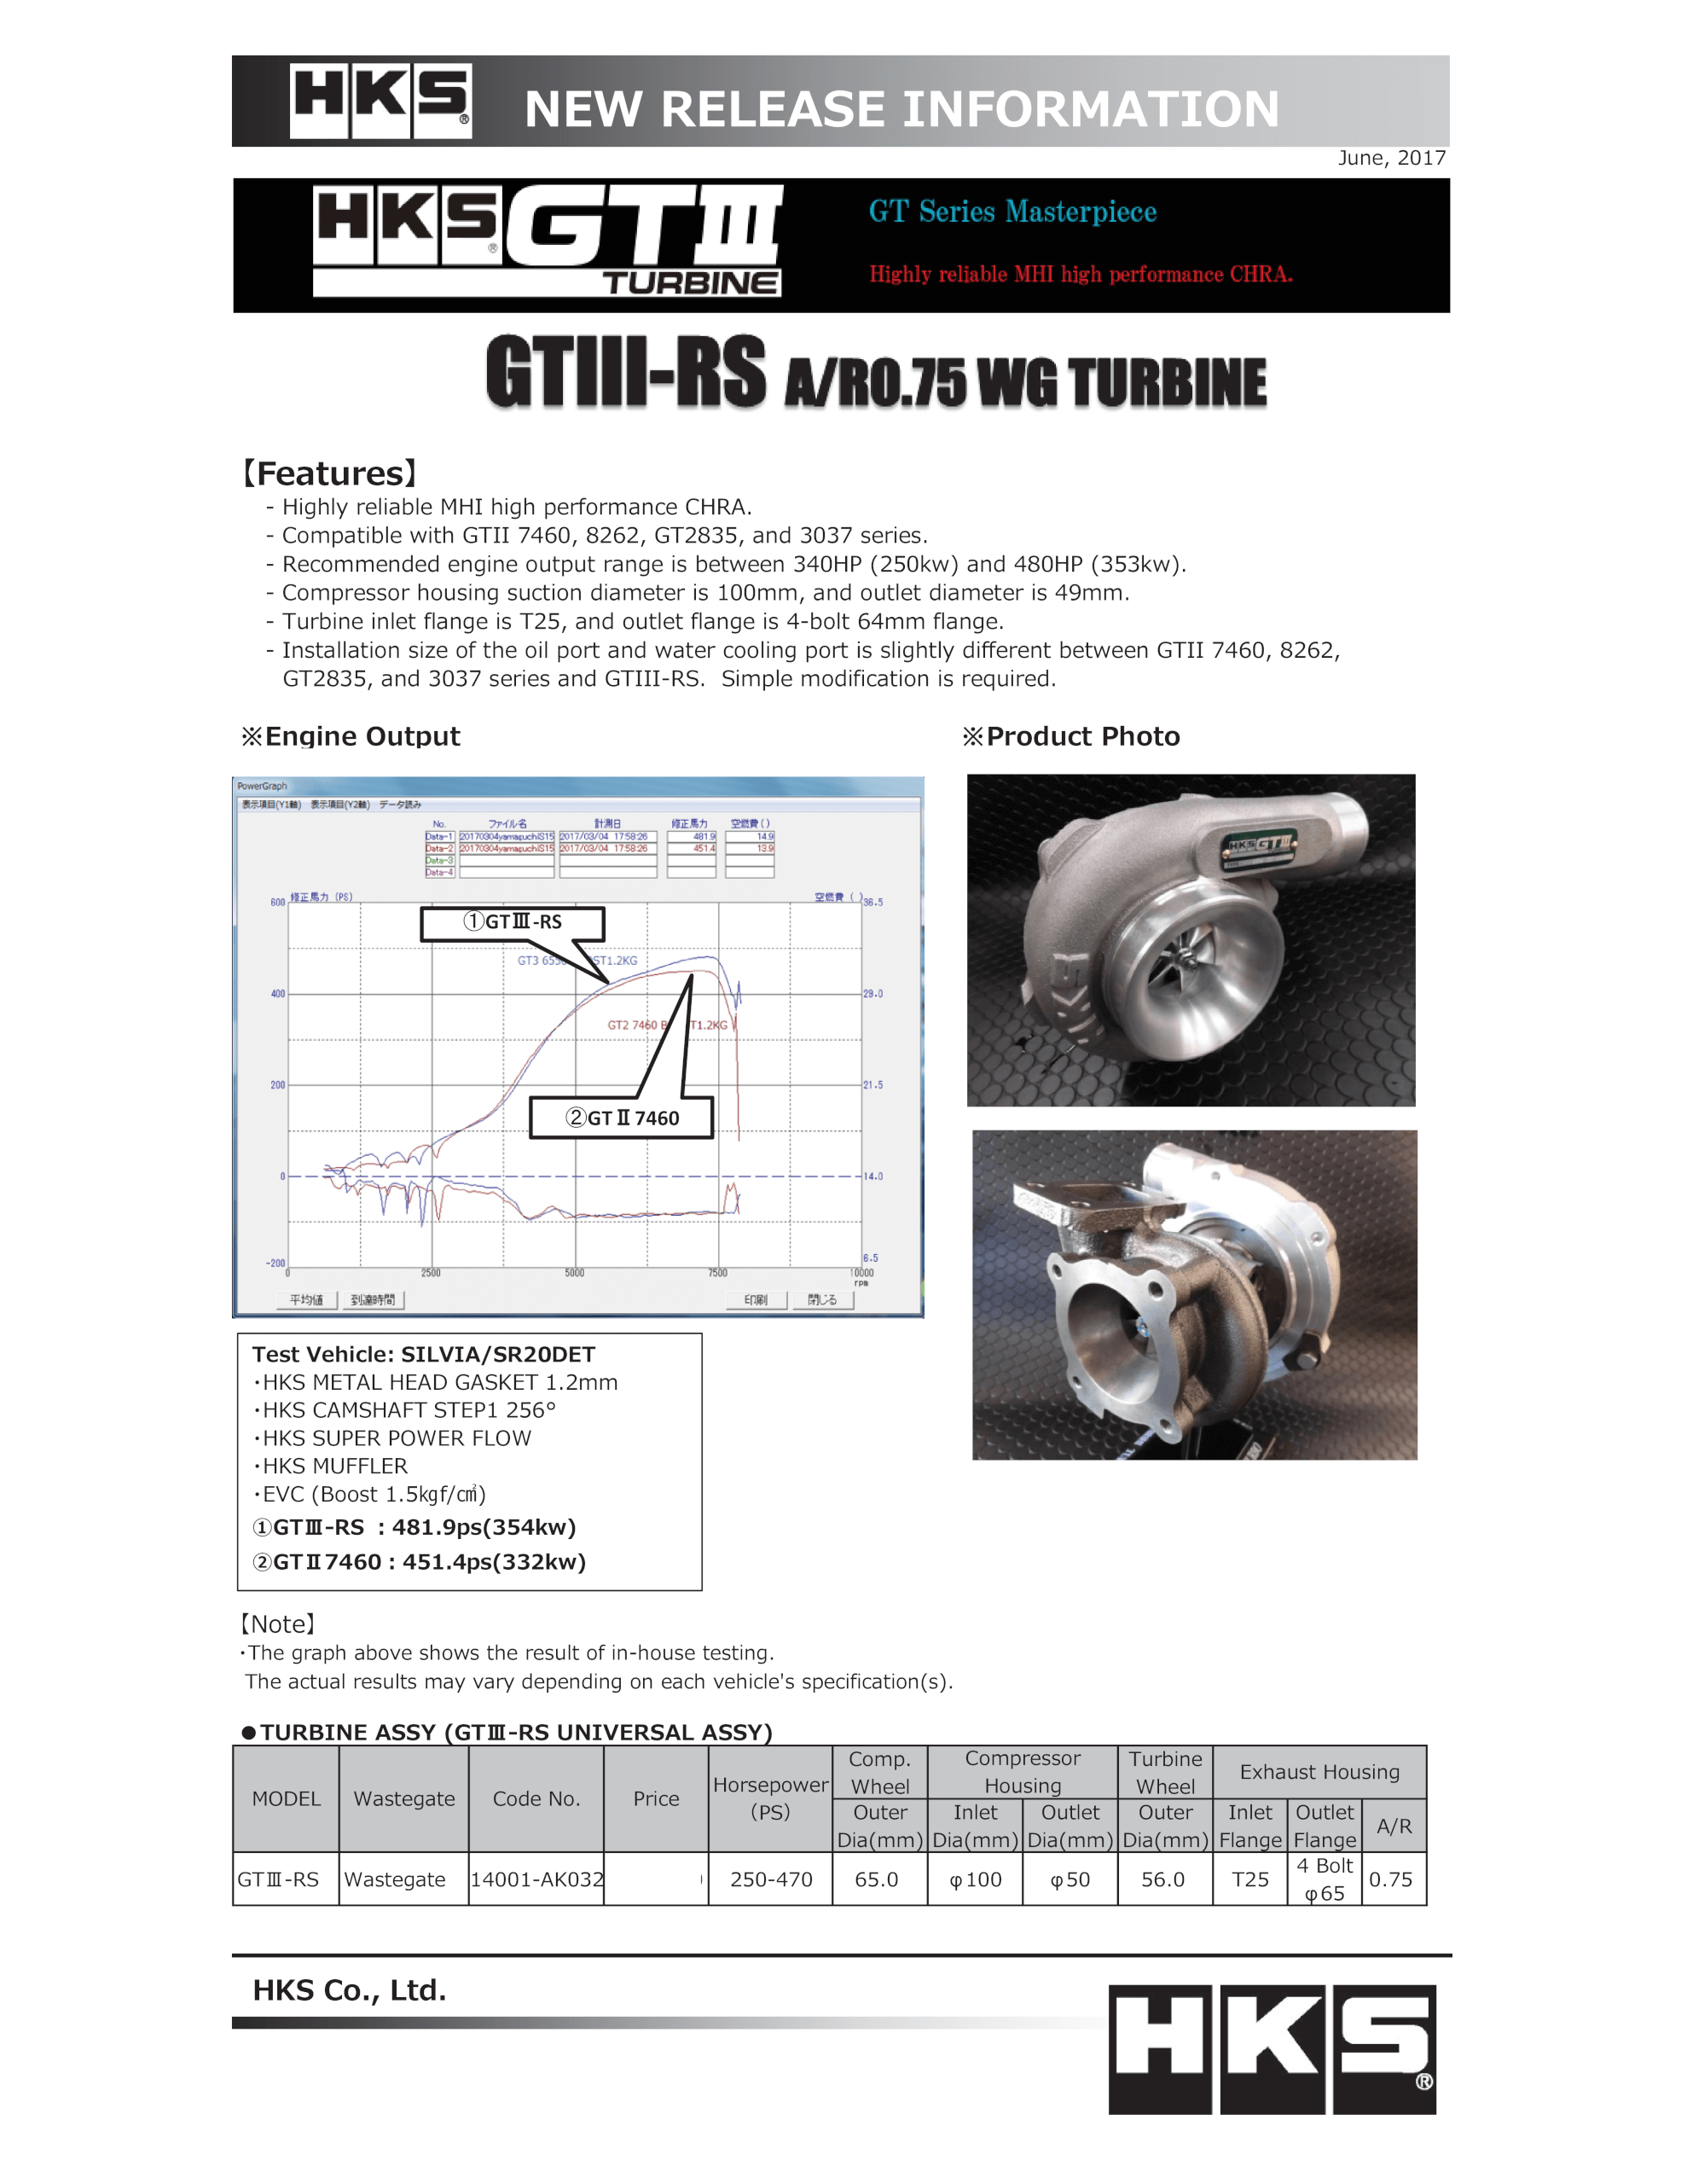 GTIII-RS A/R 0.75WG TURBINE ASSY